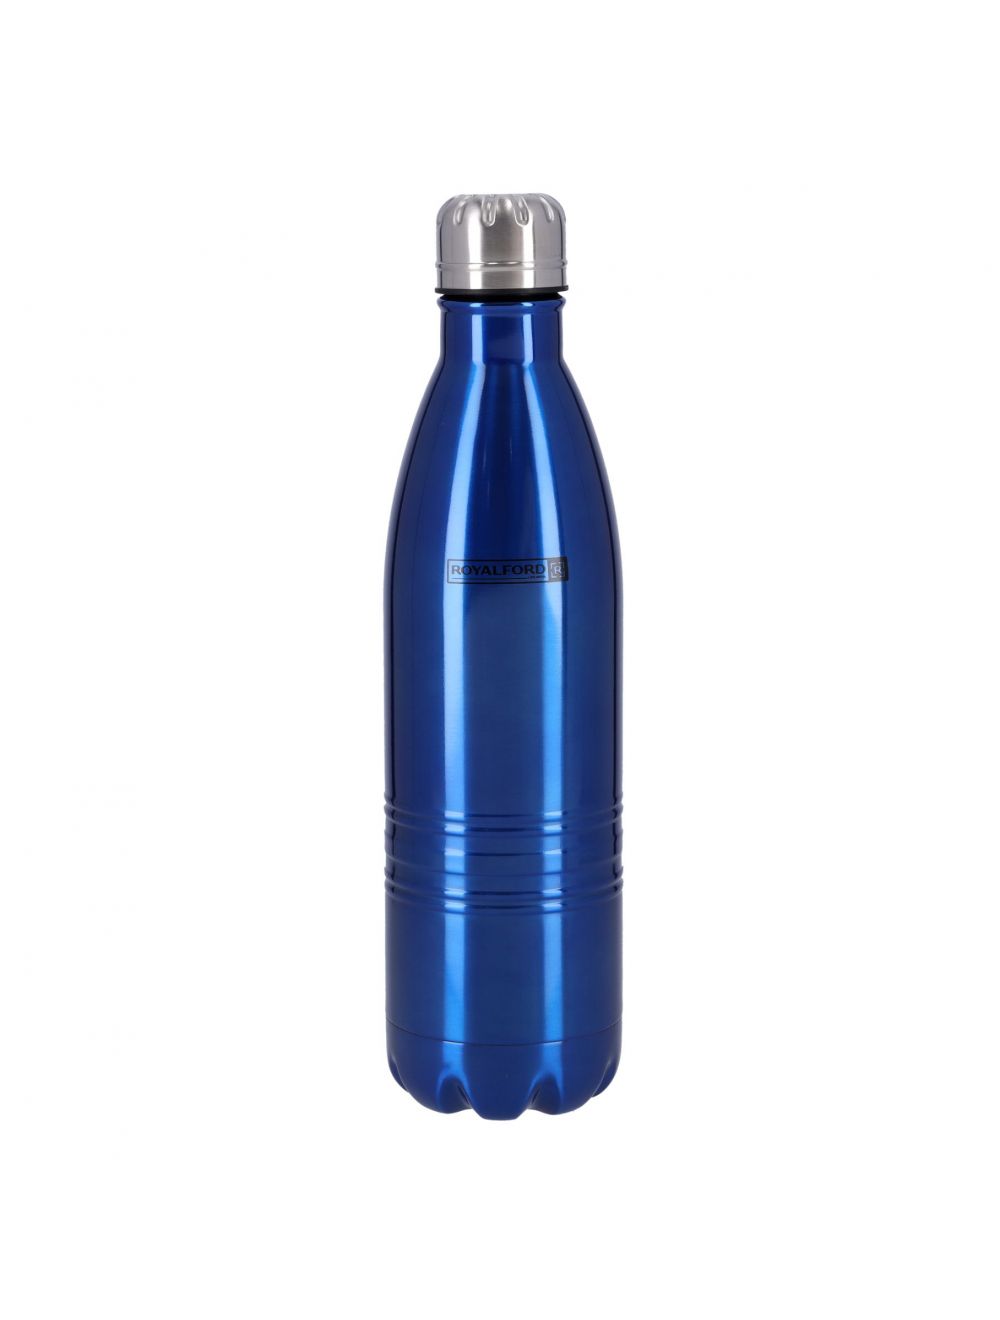 Royalford 500ml Vacuum Bottle Blue & Silver